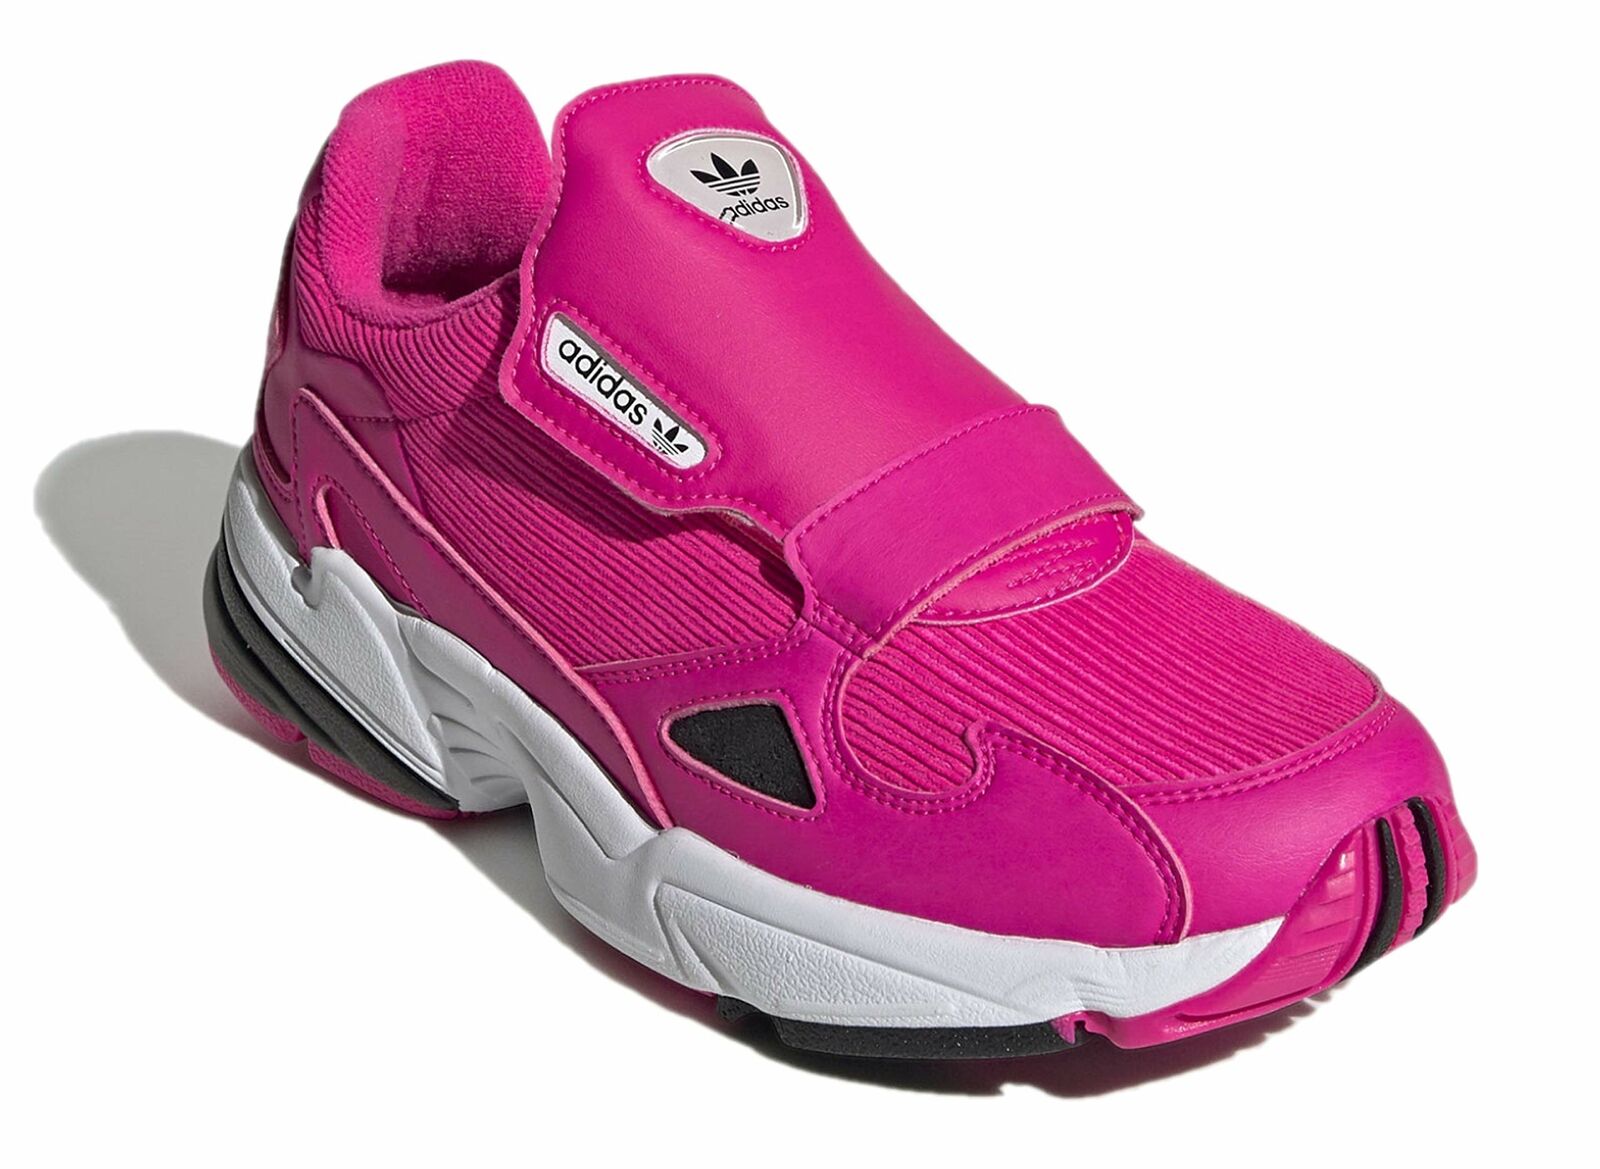 Adidas Originals Women's Falcon RX Shoes Size 9M EE5114 Pink/Black/White